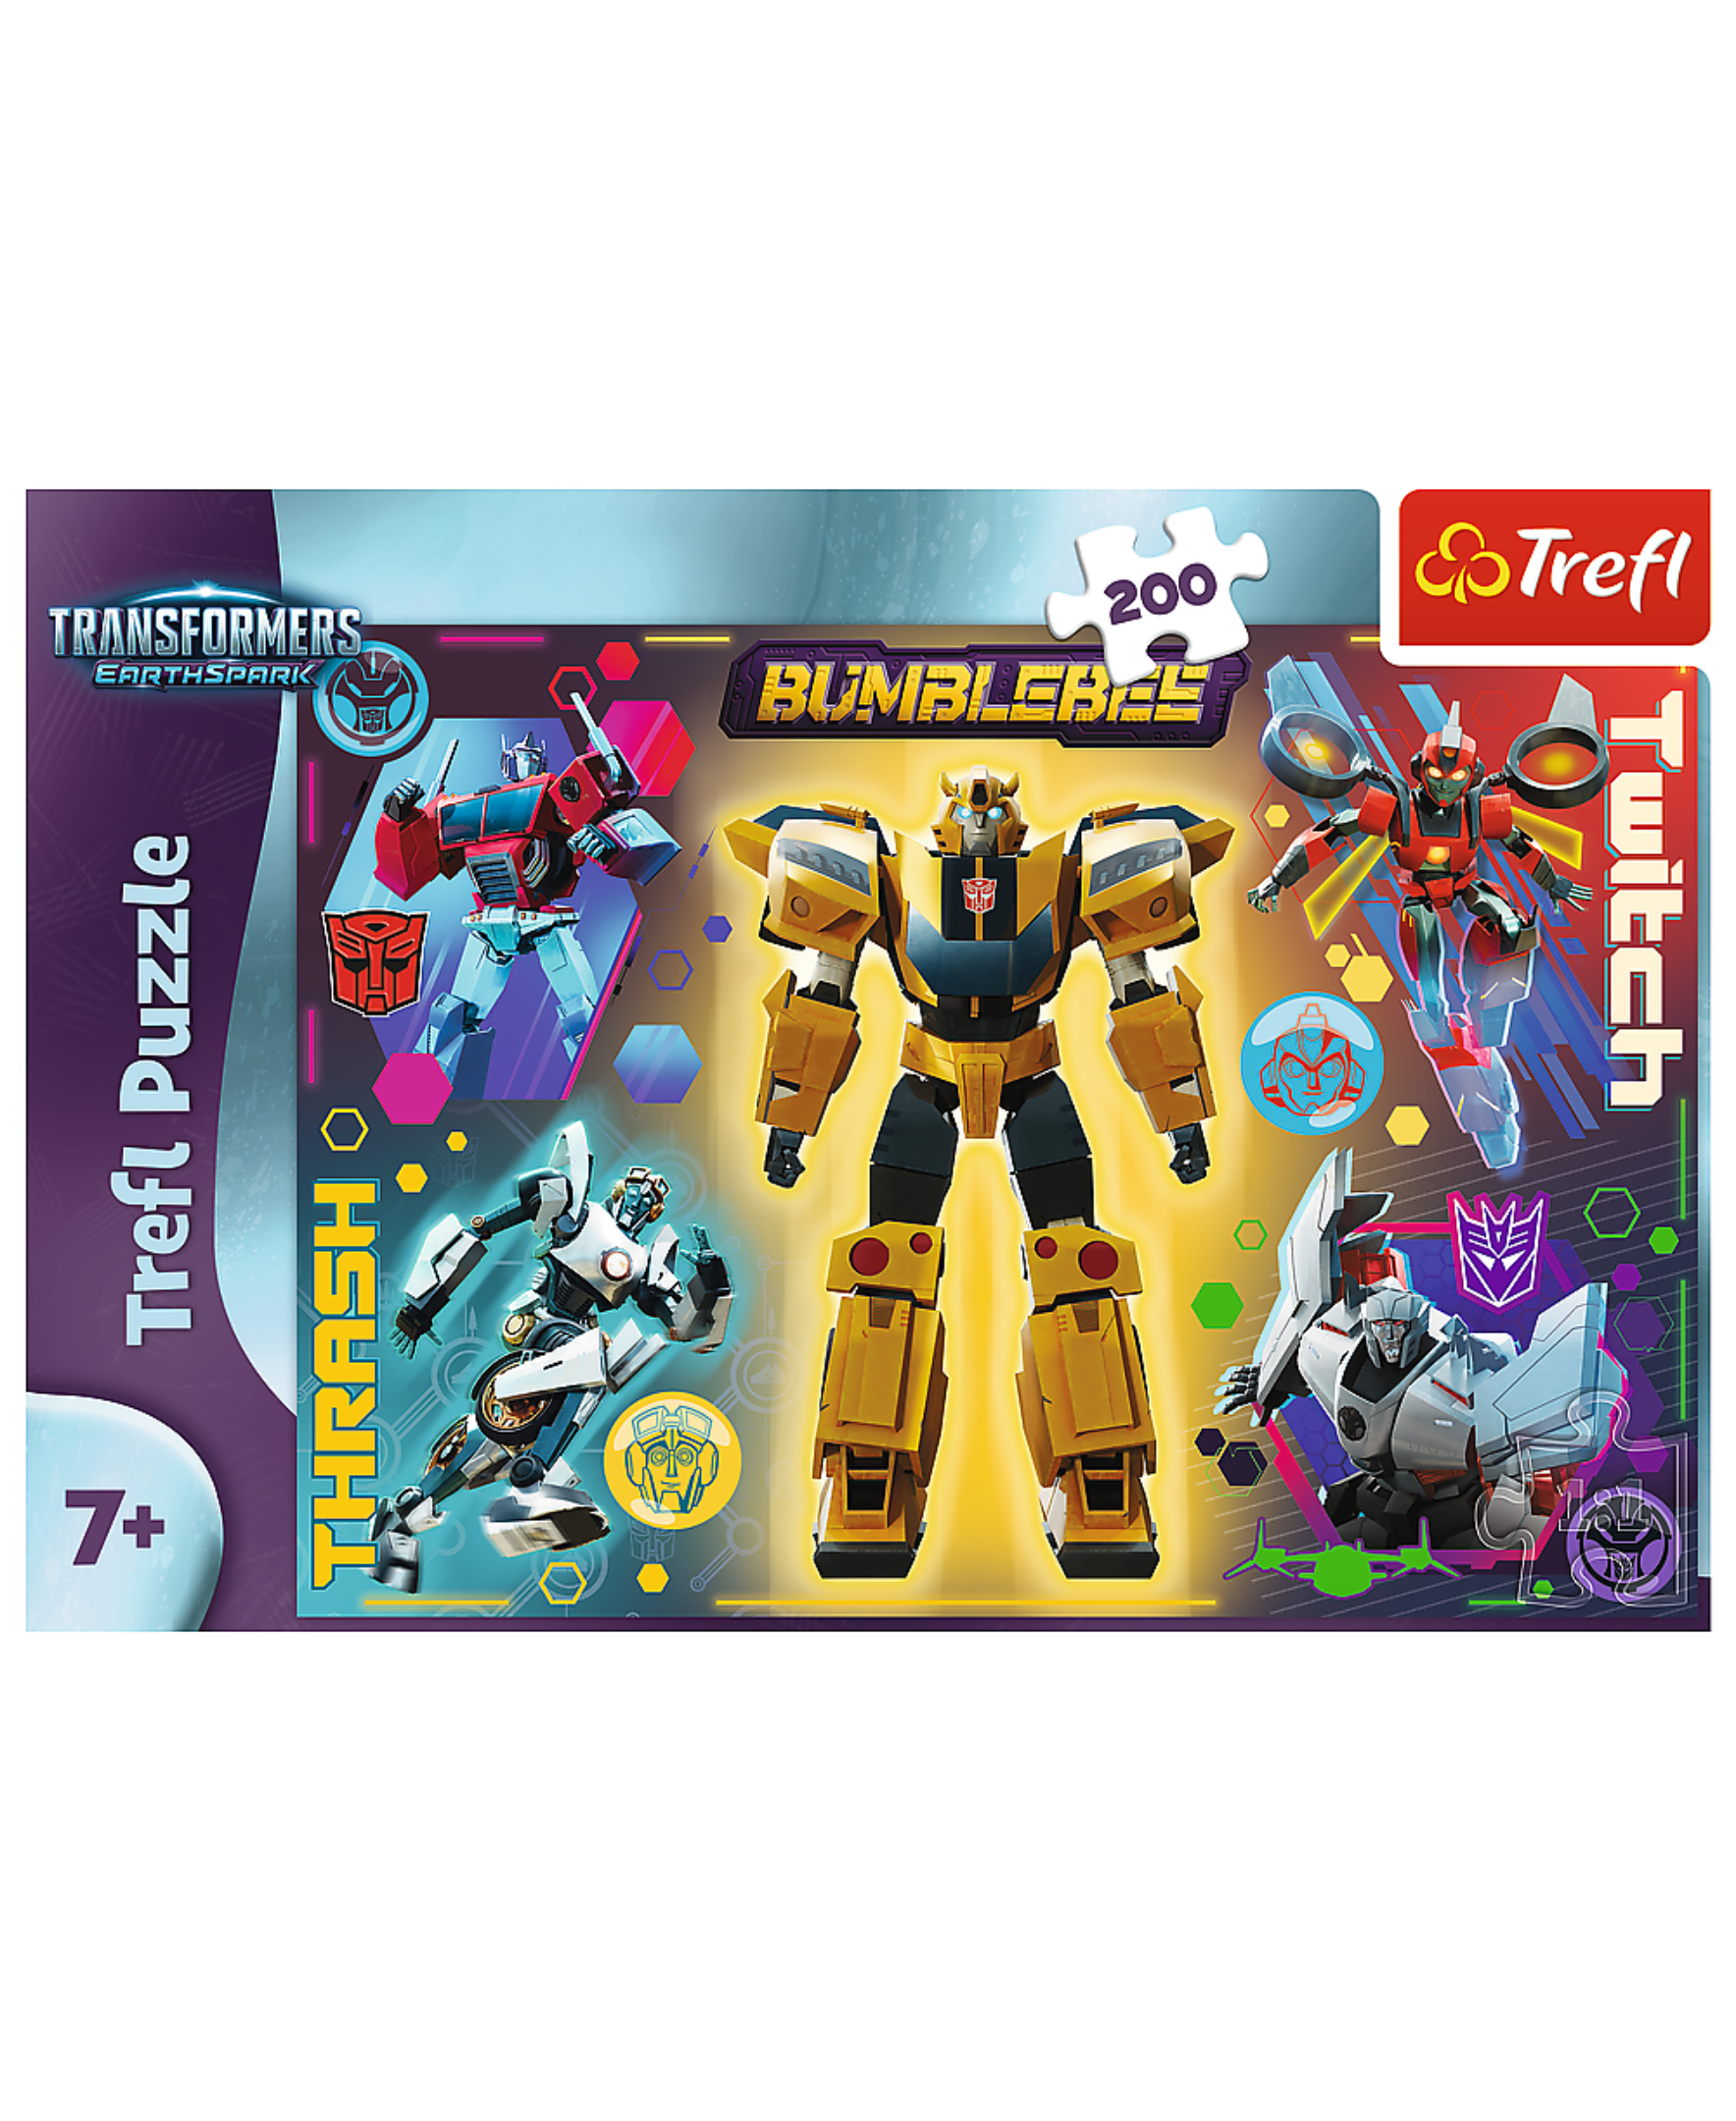 Trefl Red 200 Piece Puzzle - Transformers